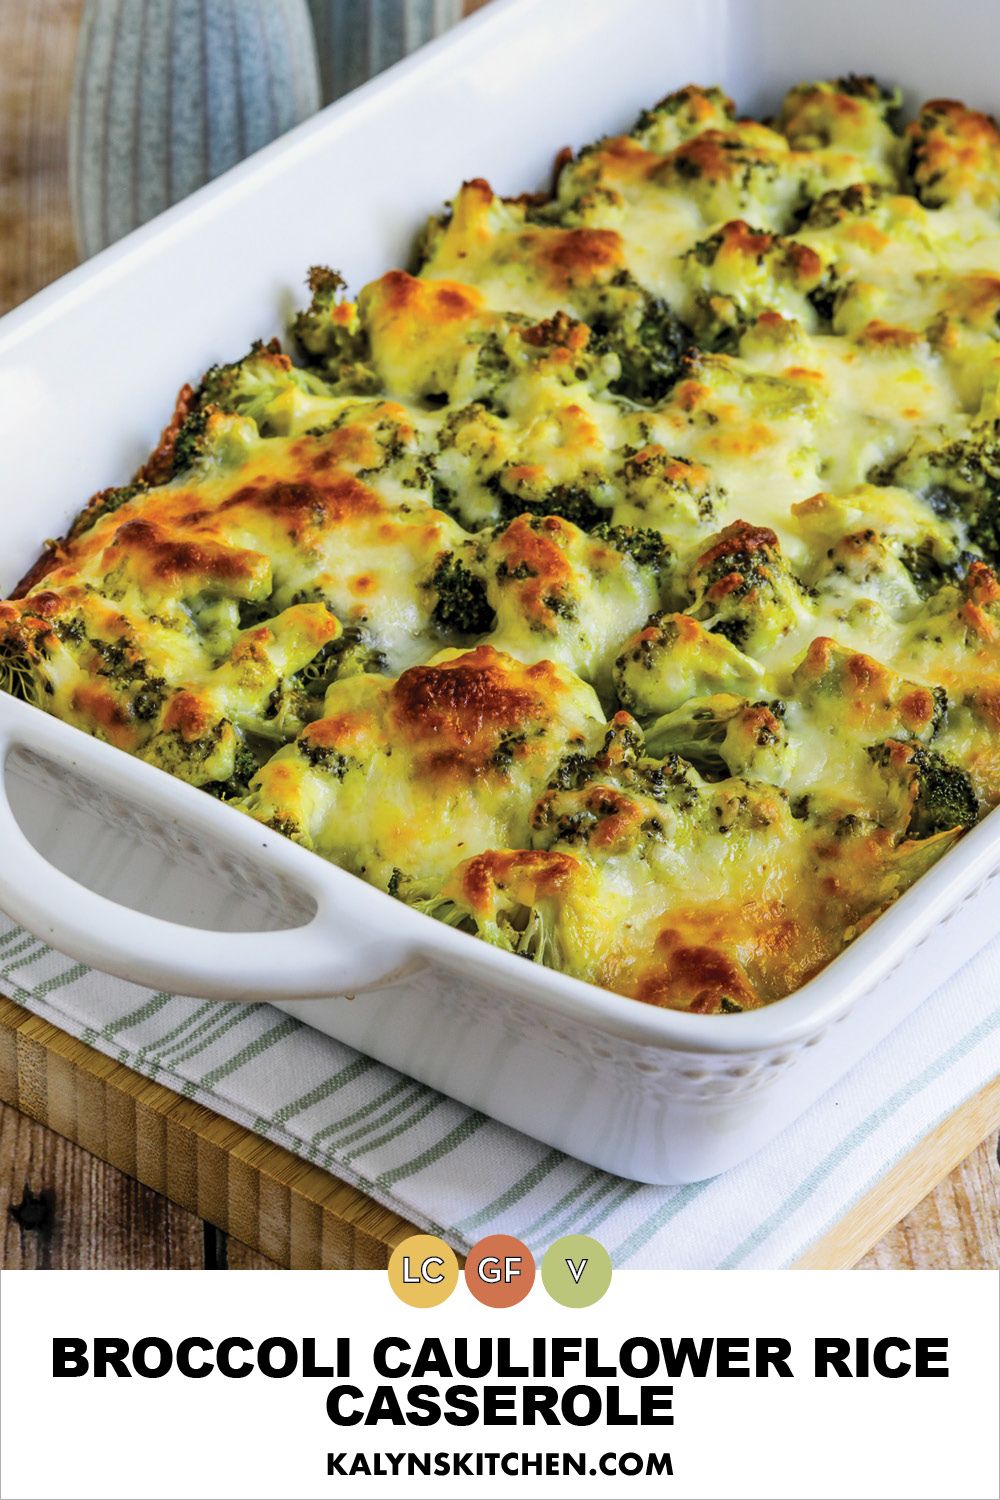 Pinterest image for Broccoli Cauliflower Rice Casserole shown in baking dish.